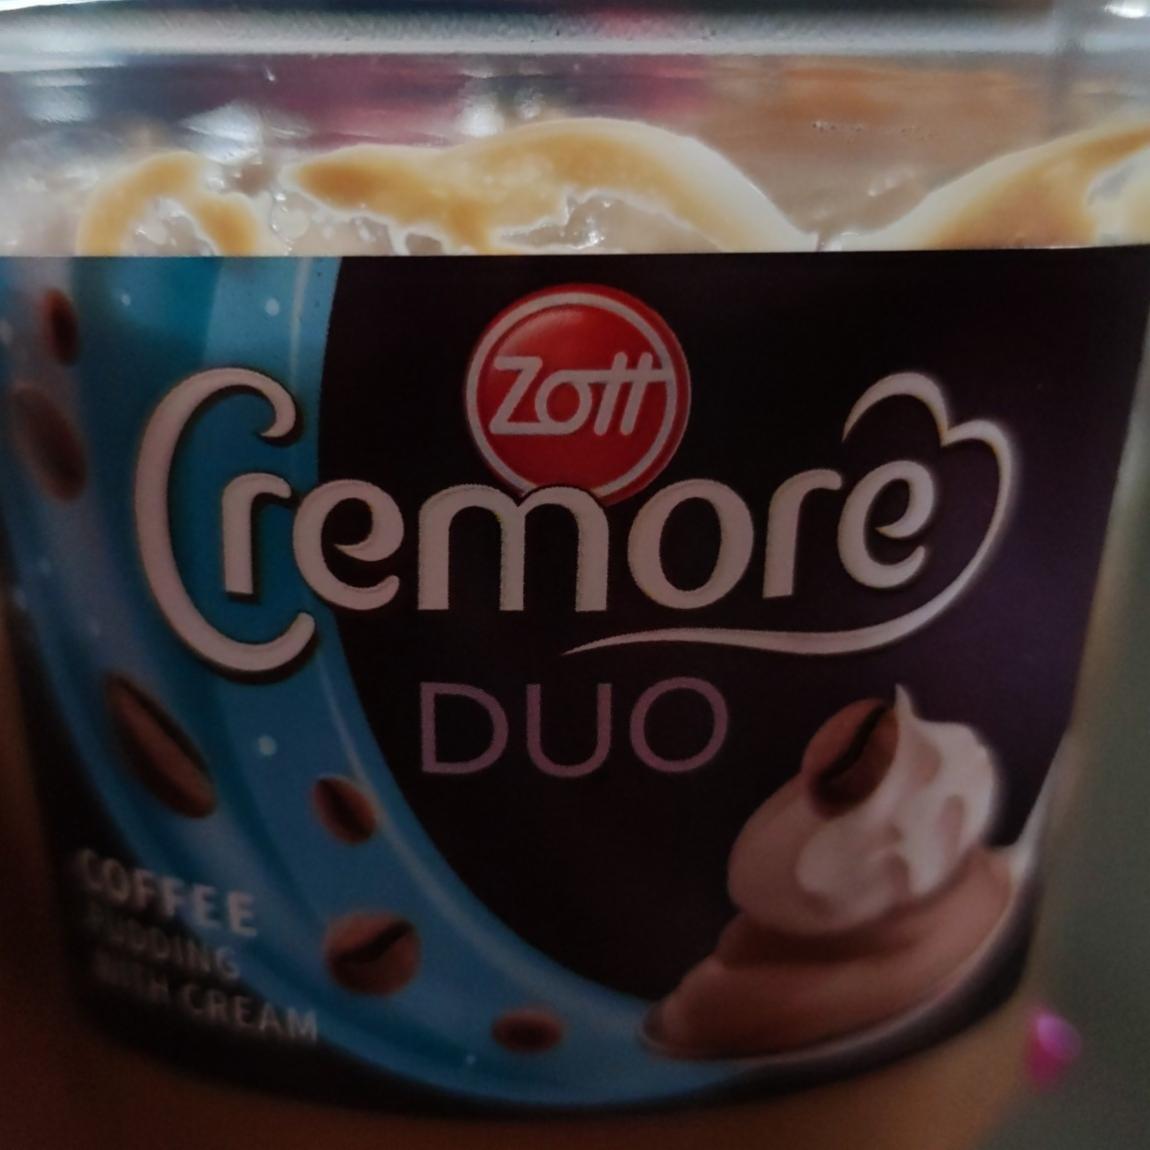 Fotografie - Cremore Duo Coffee with cream Zott